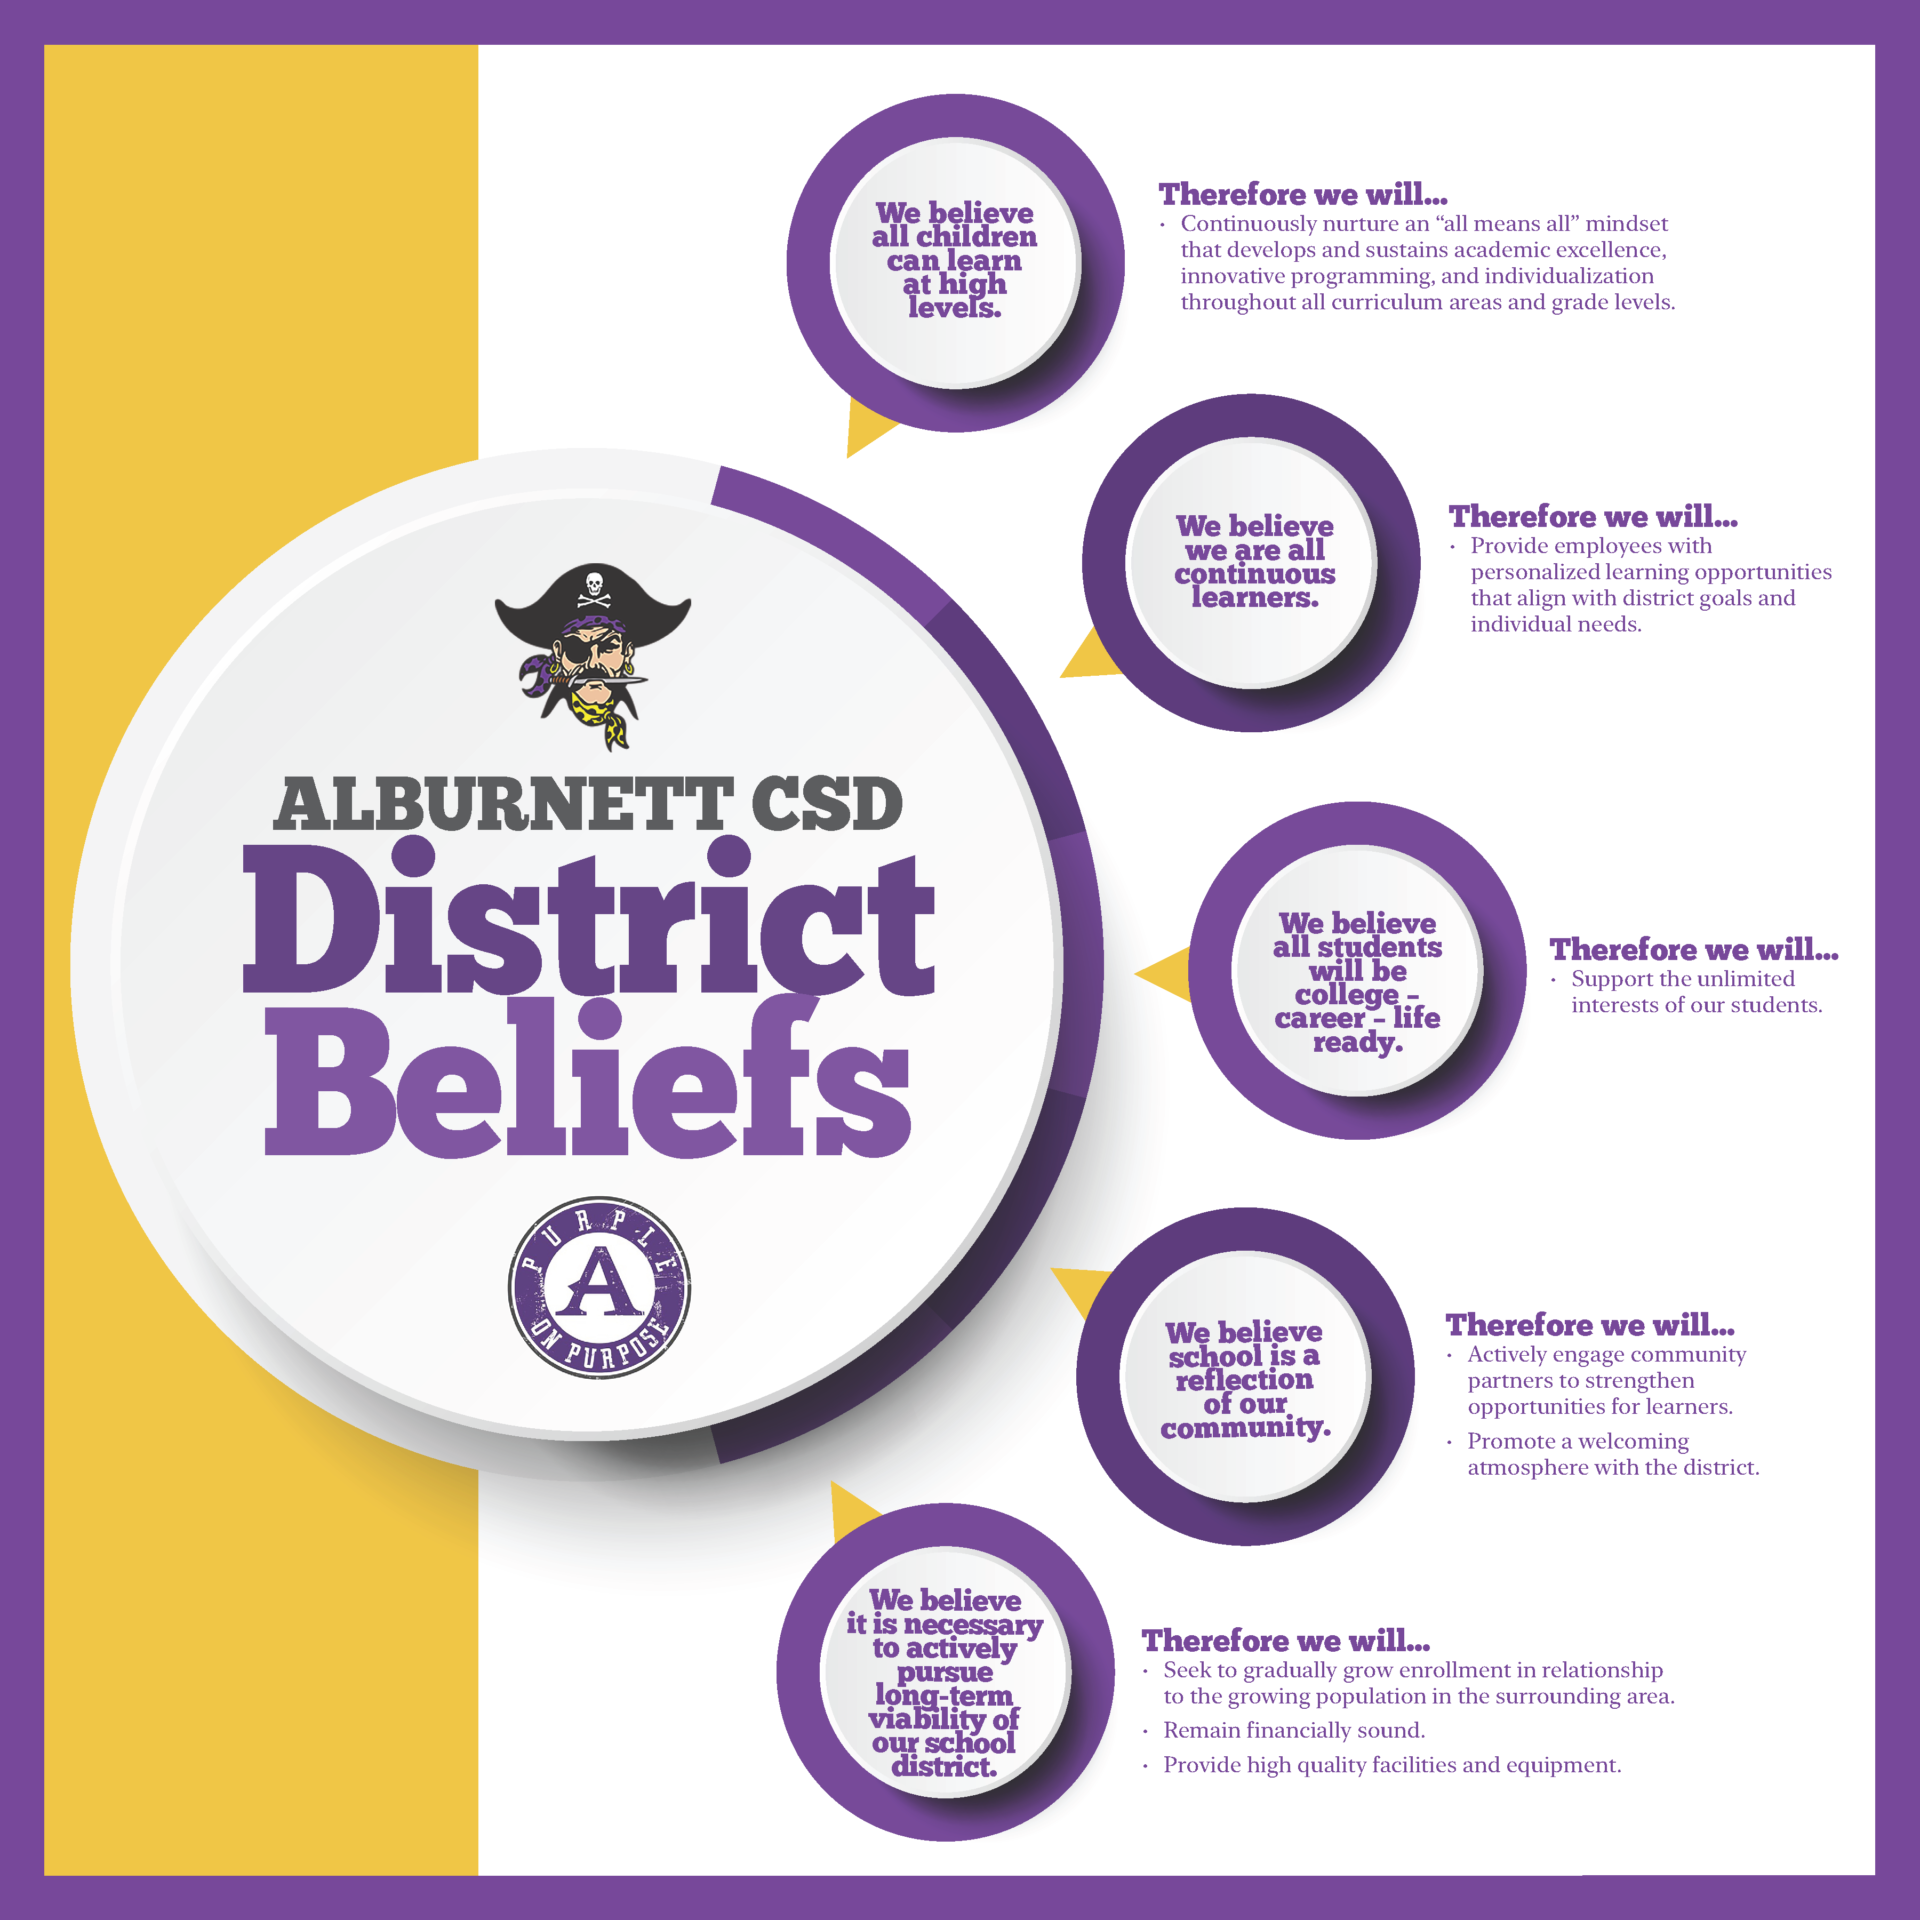 ALBURNETT CSD District Beliefs